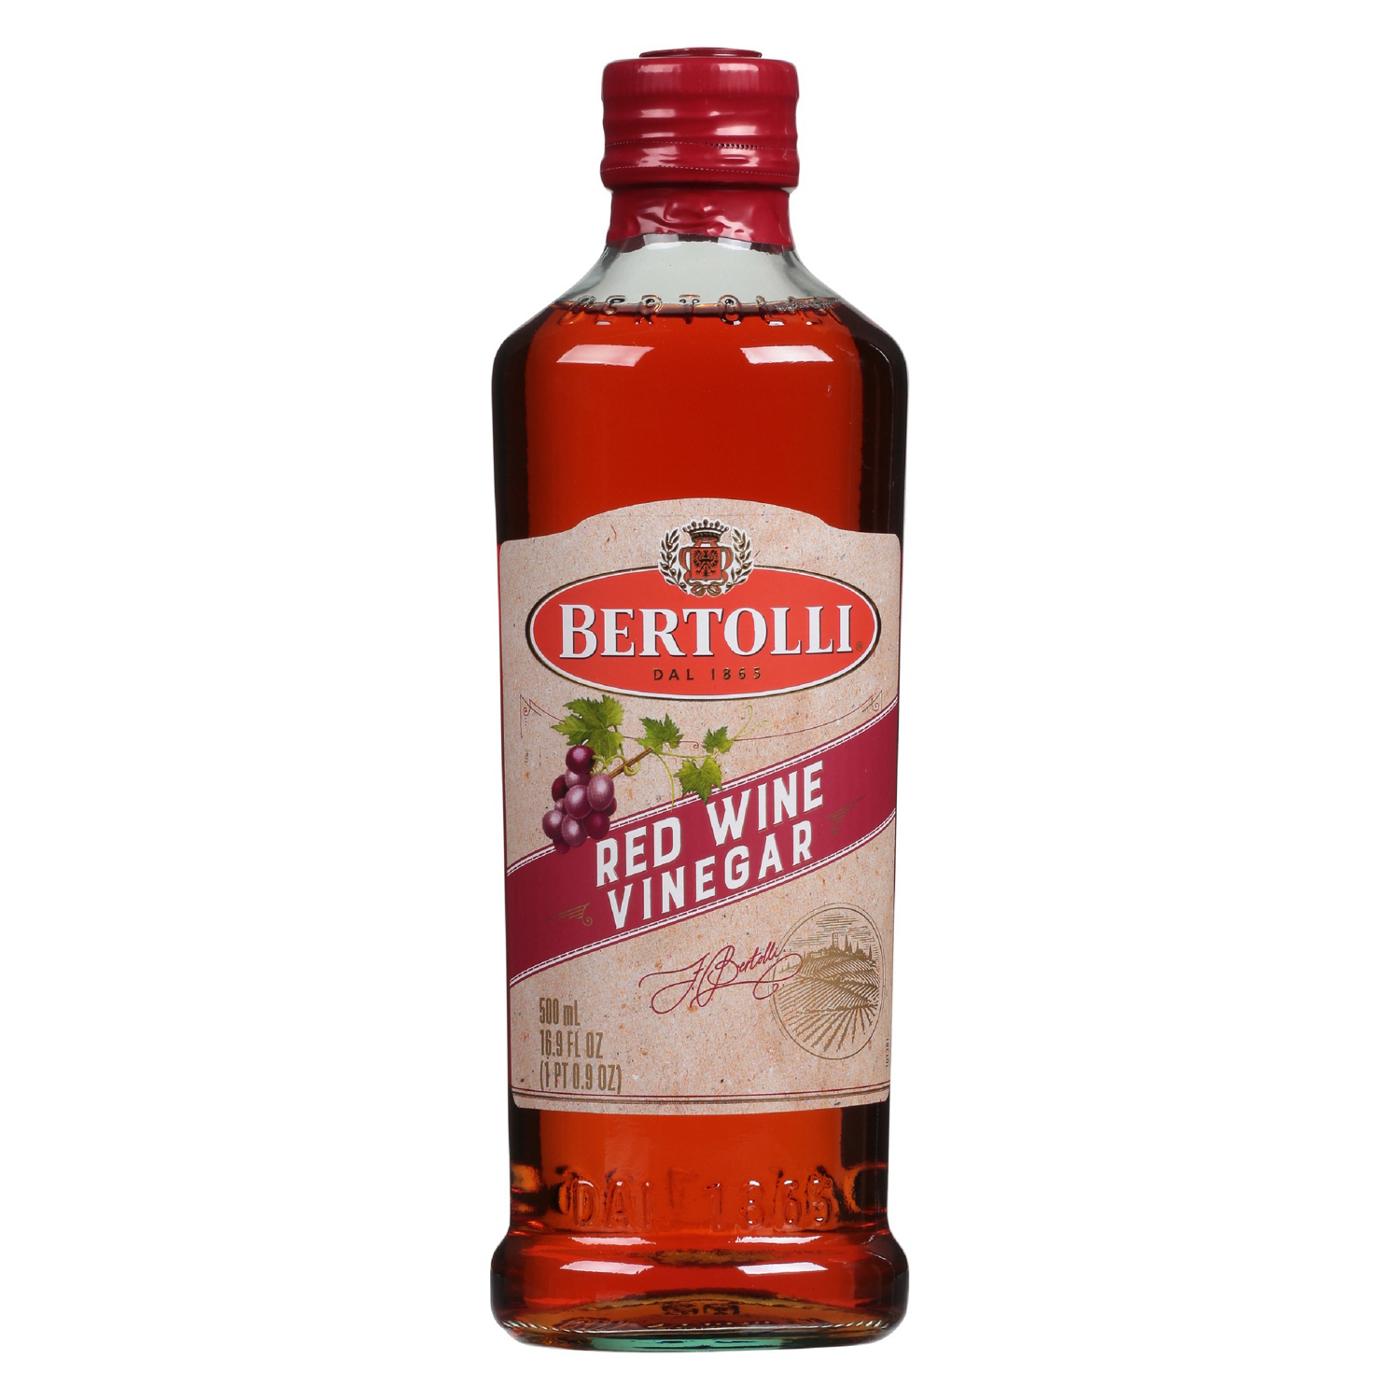 Bertolli Red Wine Vinegar; image 1 of 2